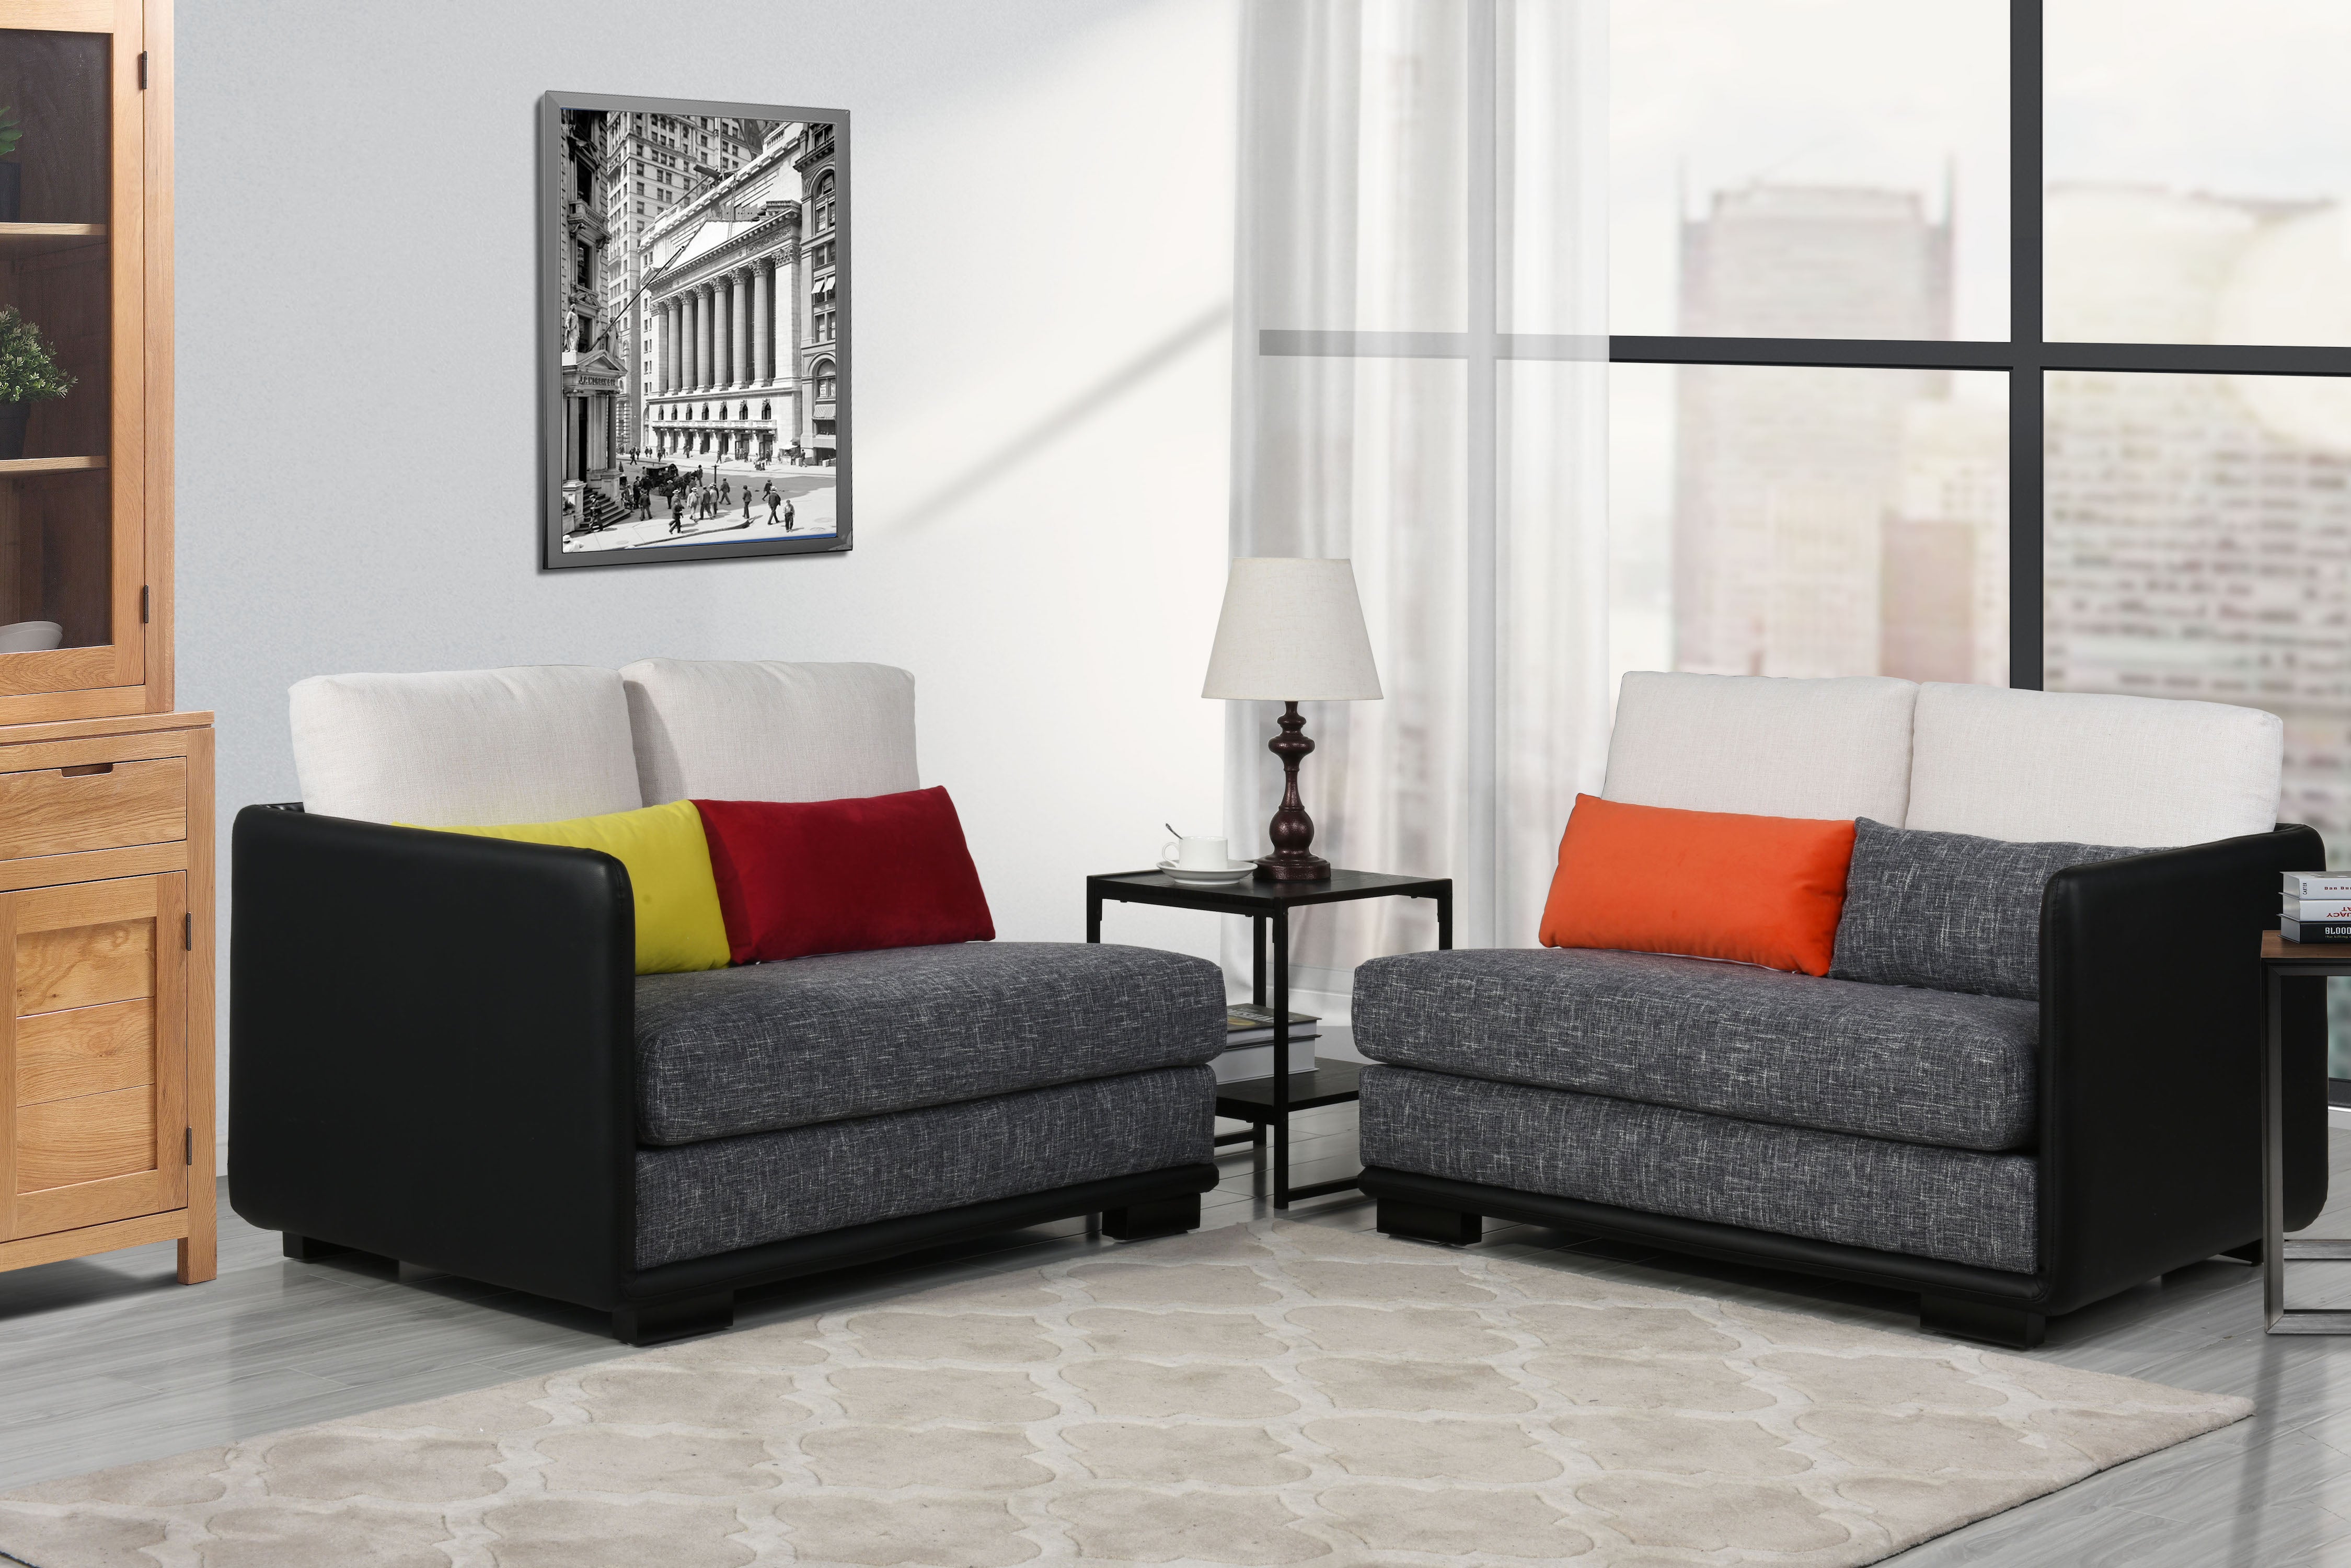 EXP251-DGR-BLK Nova Contemporary Convertible Sofa with Colorful A sku EXP251-DGR-BLK